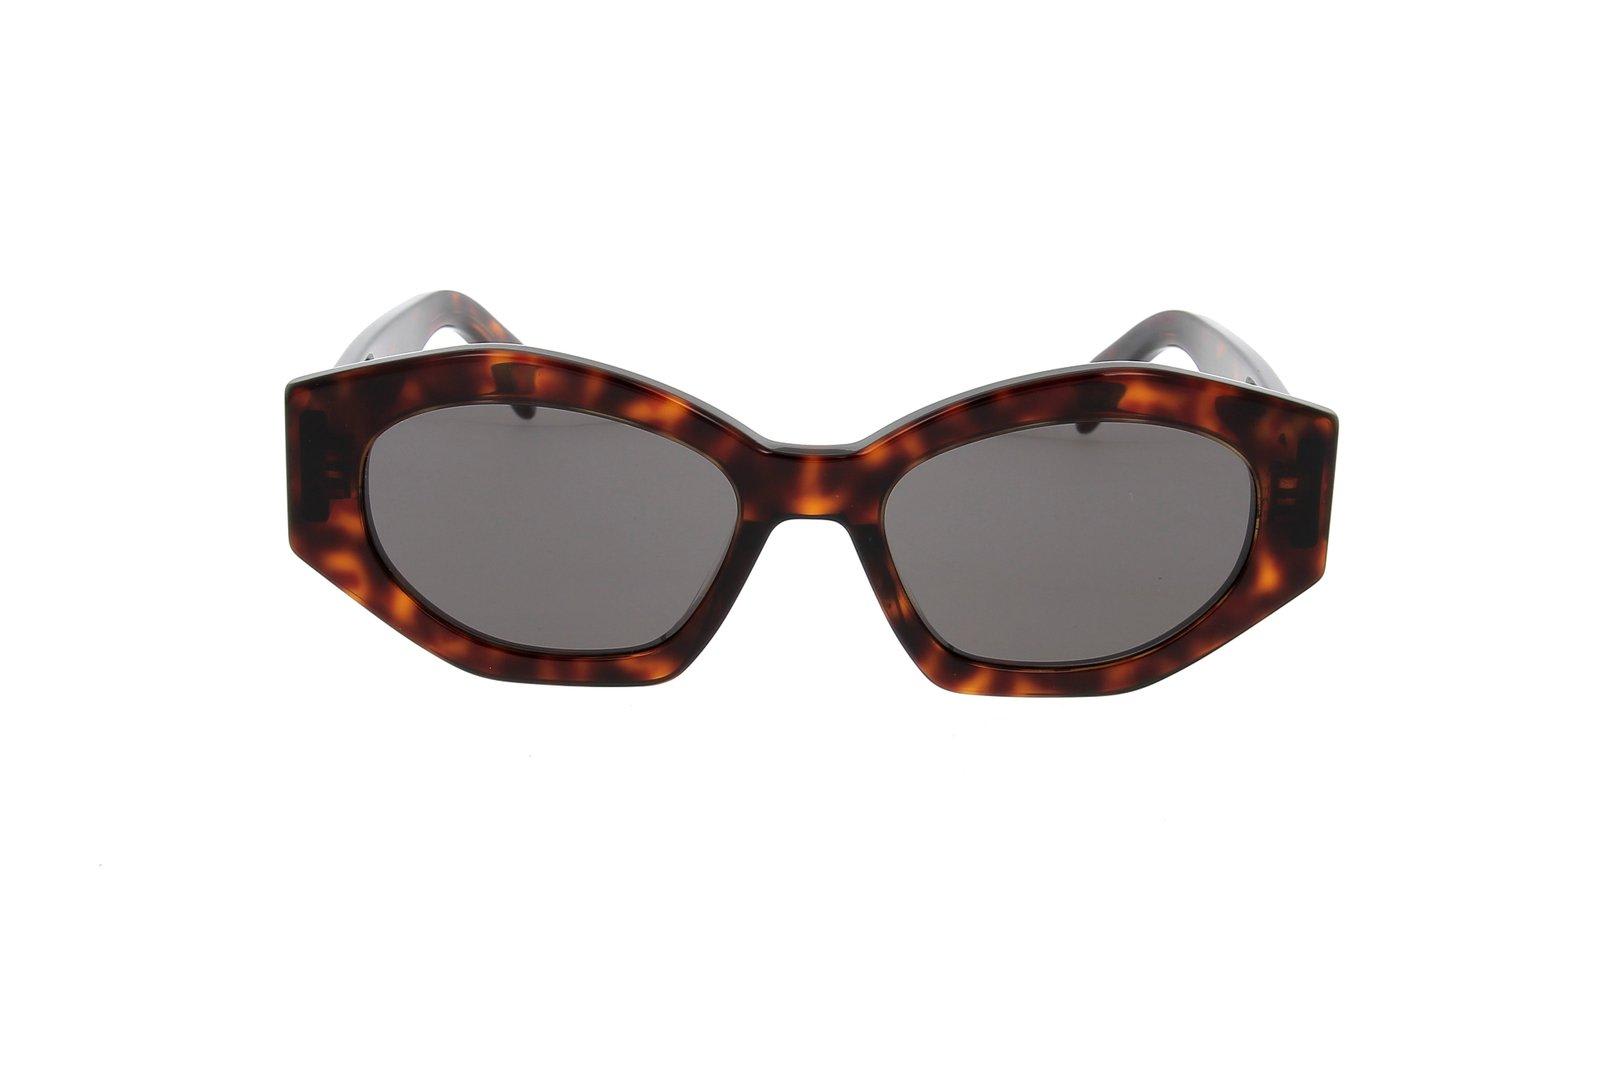 Irregular Frame Sunglasses